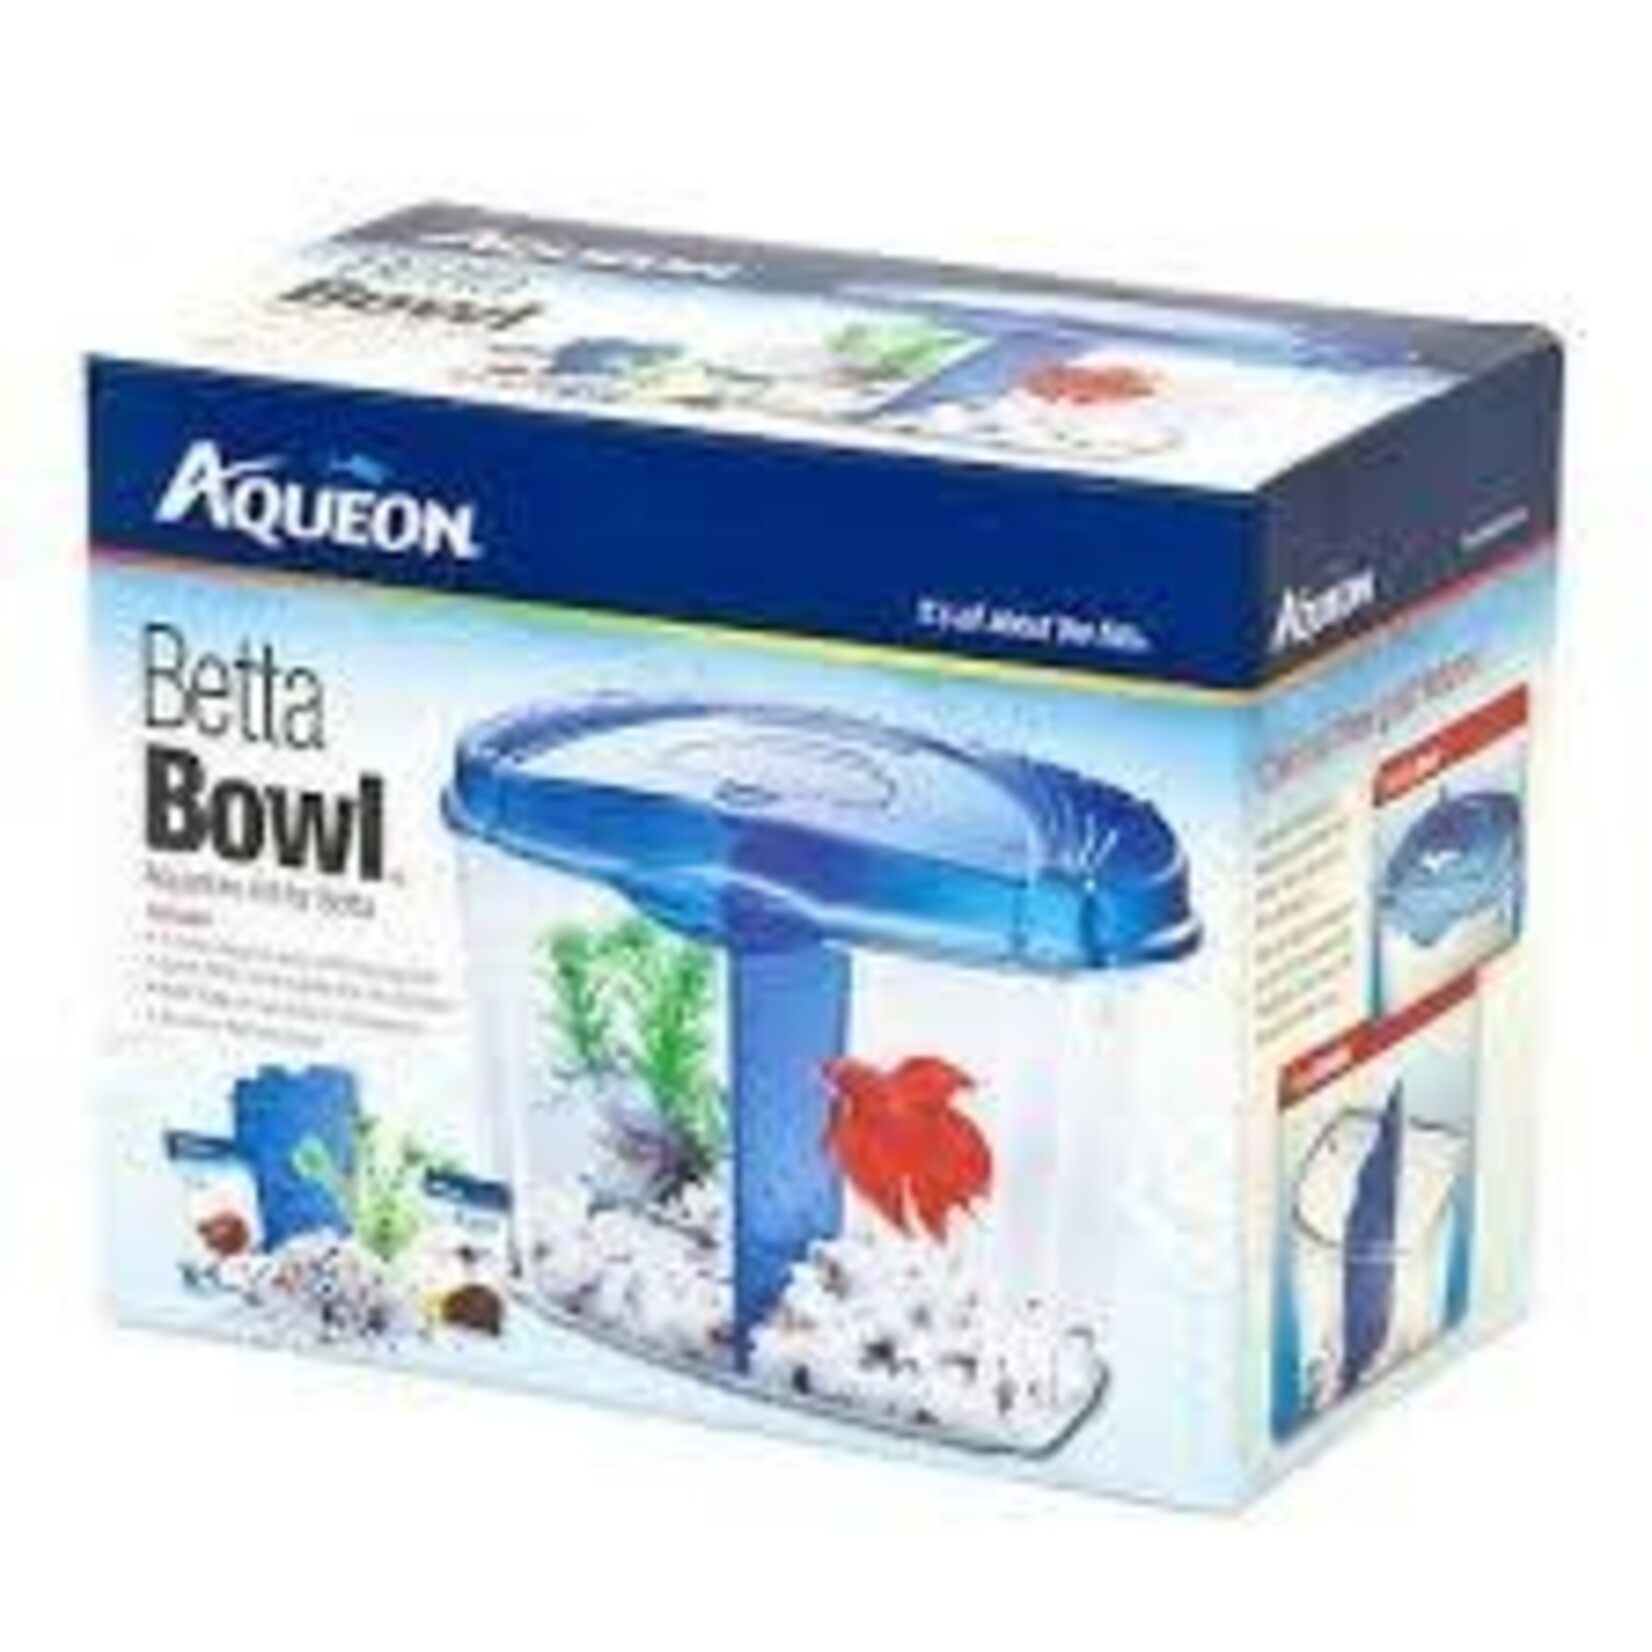 AQUEON Aqueon Betta Bowl starter kit